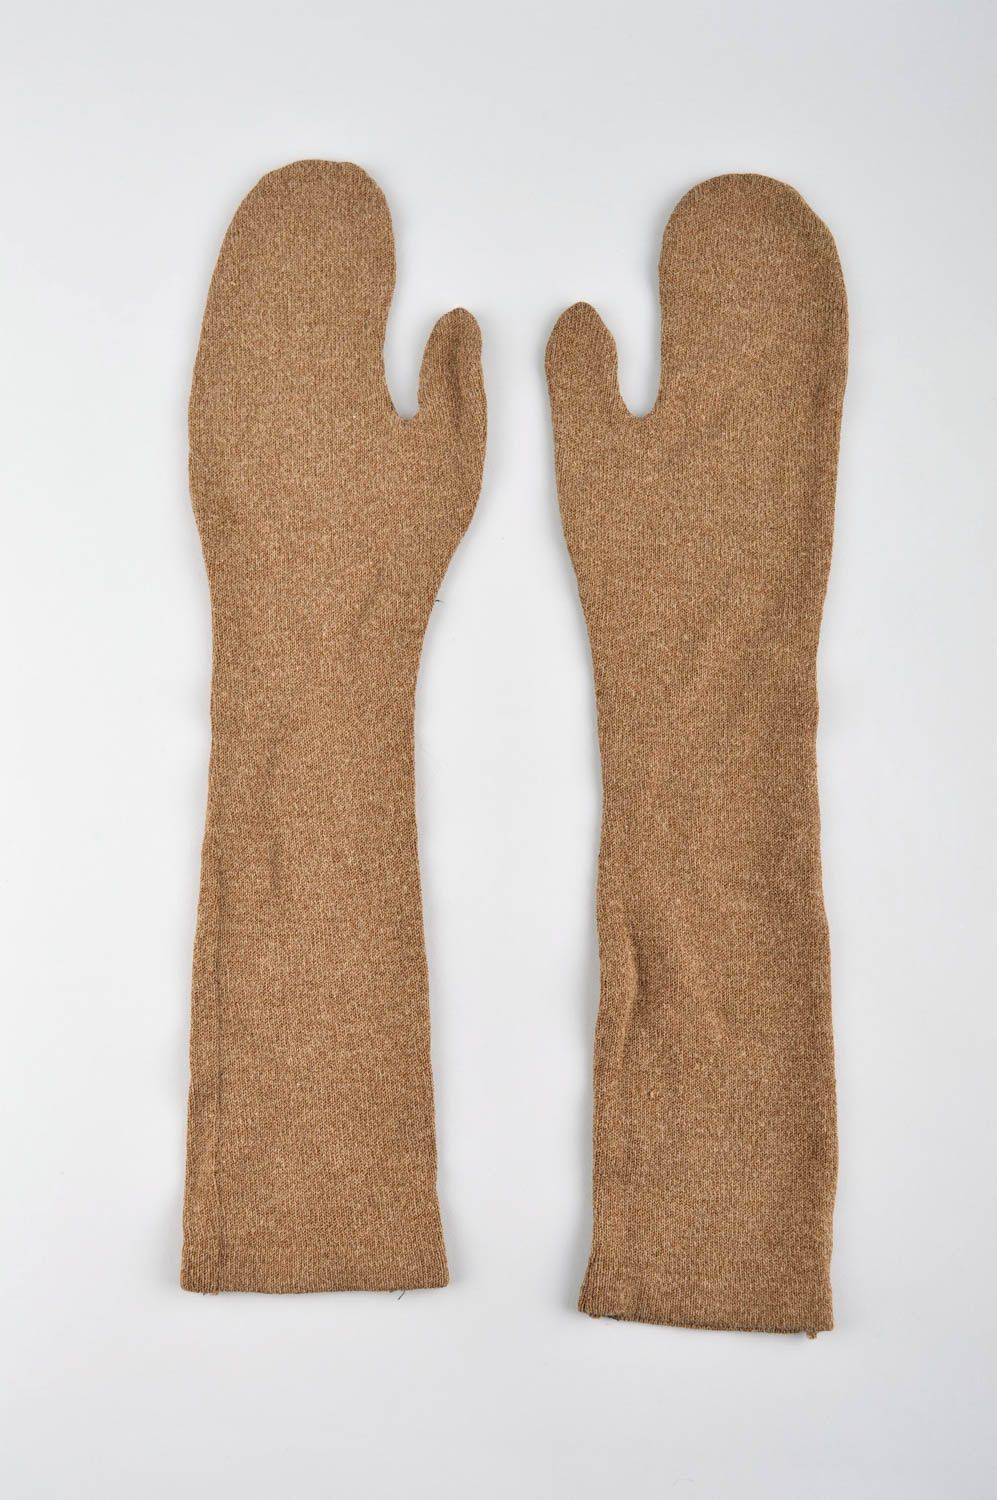 Handmade winter gloves winter accessories stylish fabric gloves for women photo 1